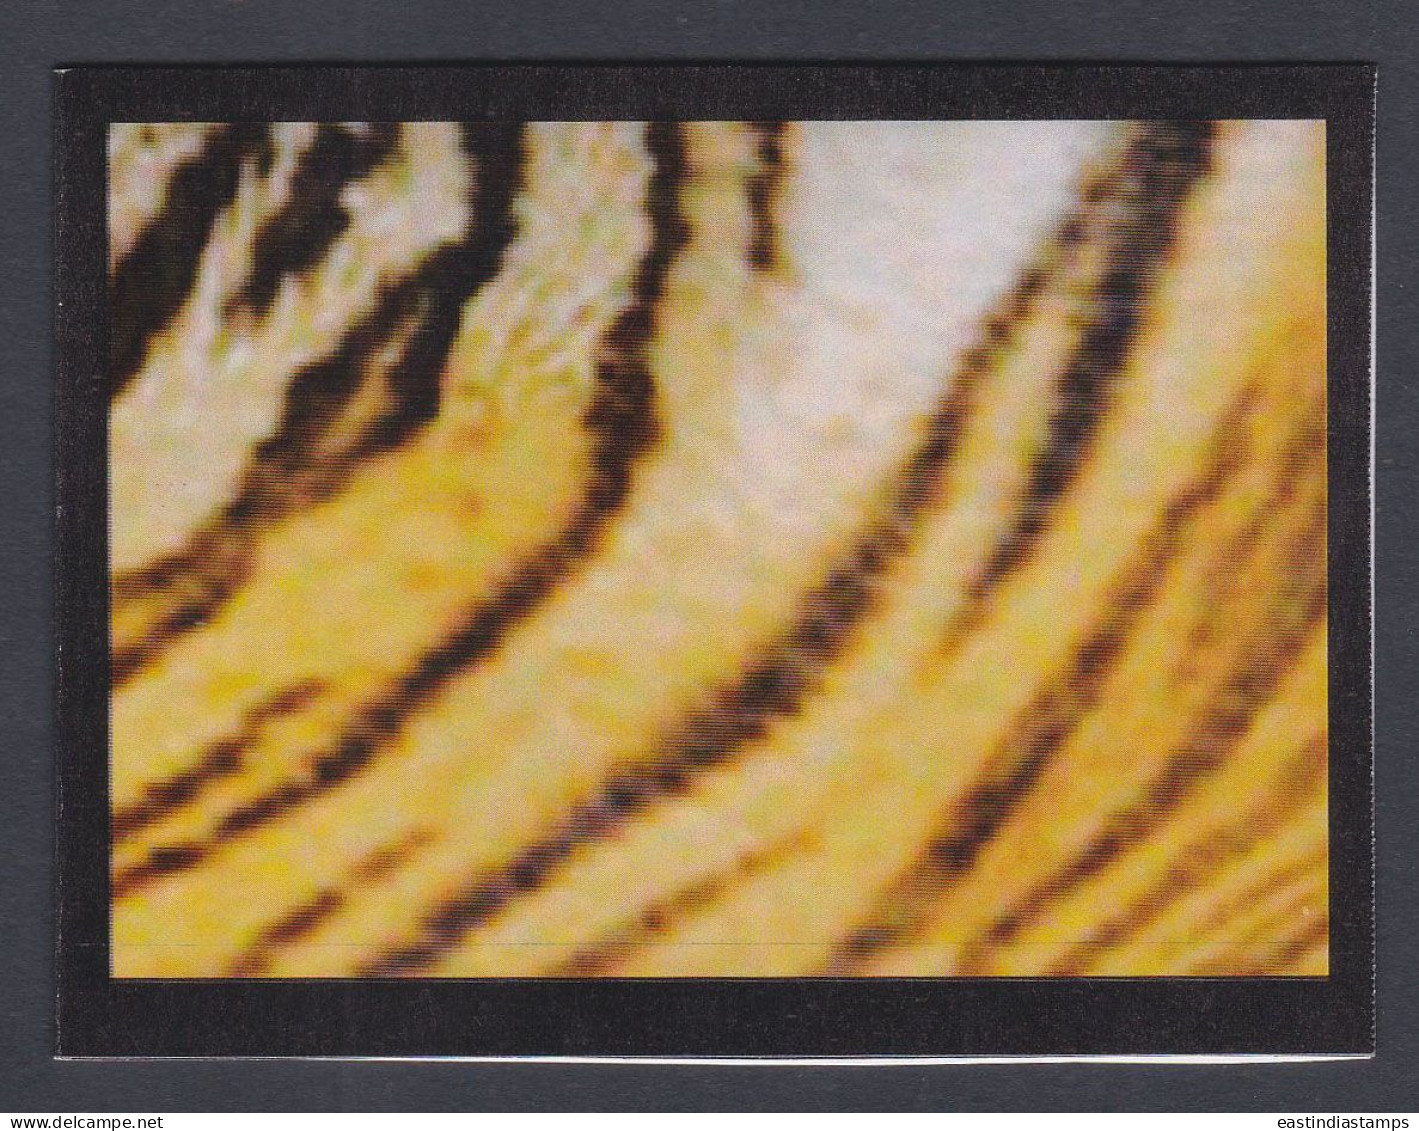 Bangladesh Mint Private Booklet Tiger, Tigers, Wildlife, Wild Life, Animal, Animals - Bangladesh